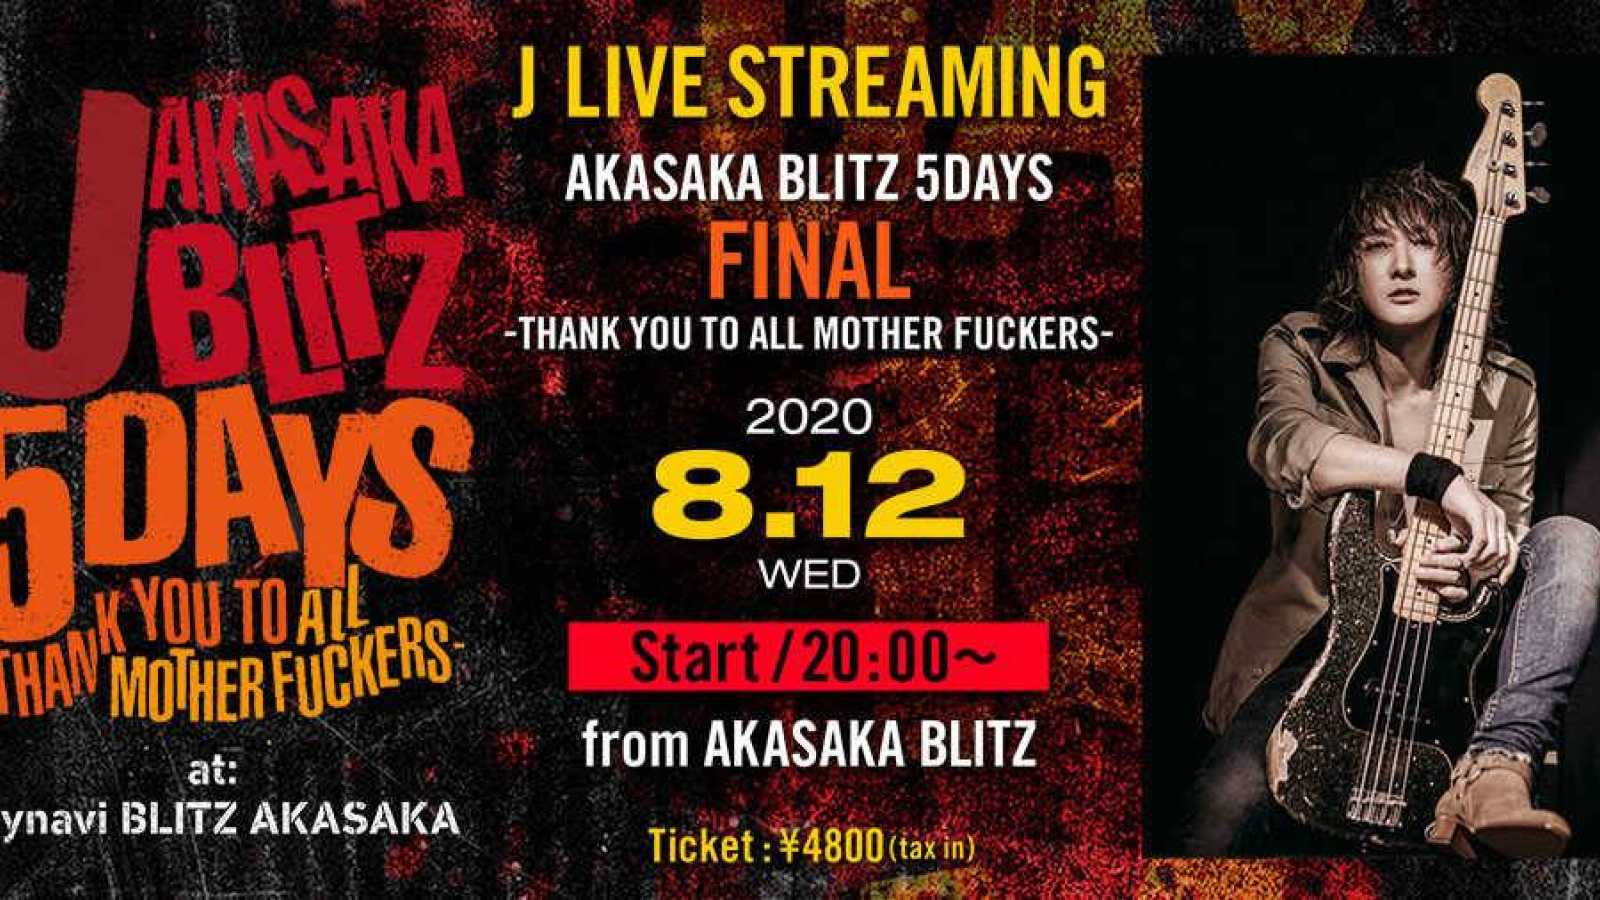 J to Stream Final "AKASAKA BLITZ 5DAYS" Show on niconico LiVE © J. All rights reserved.